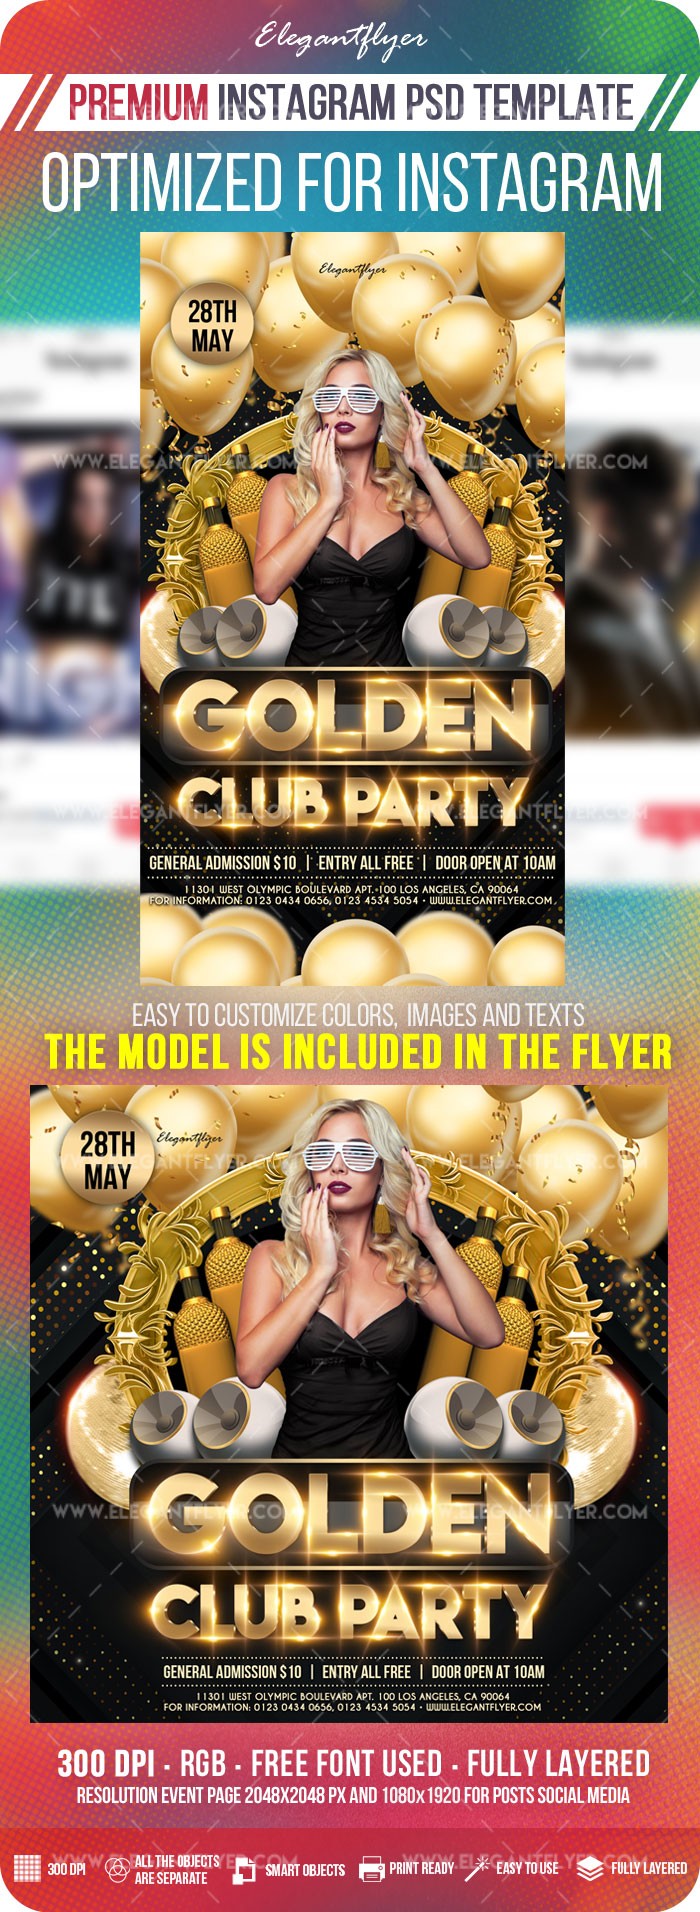 Golden Club Party Instagram by ElegantFlyer